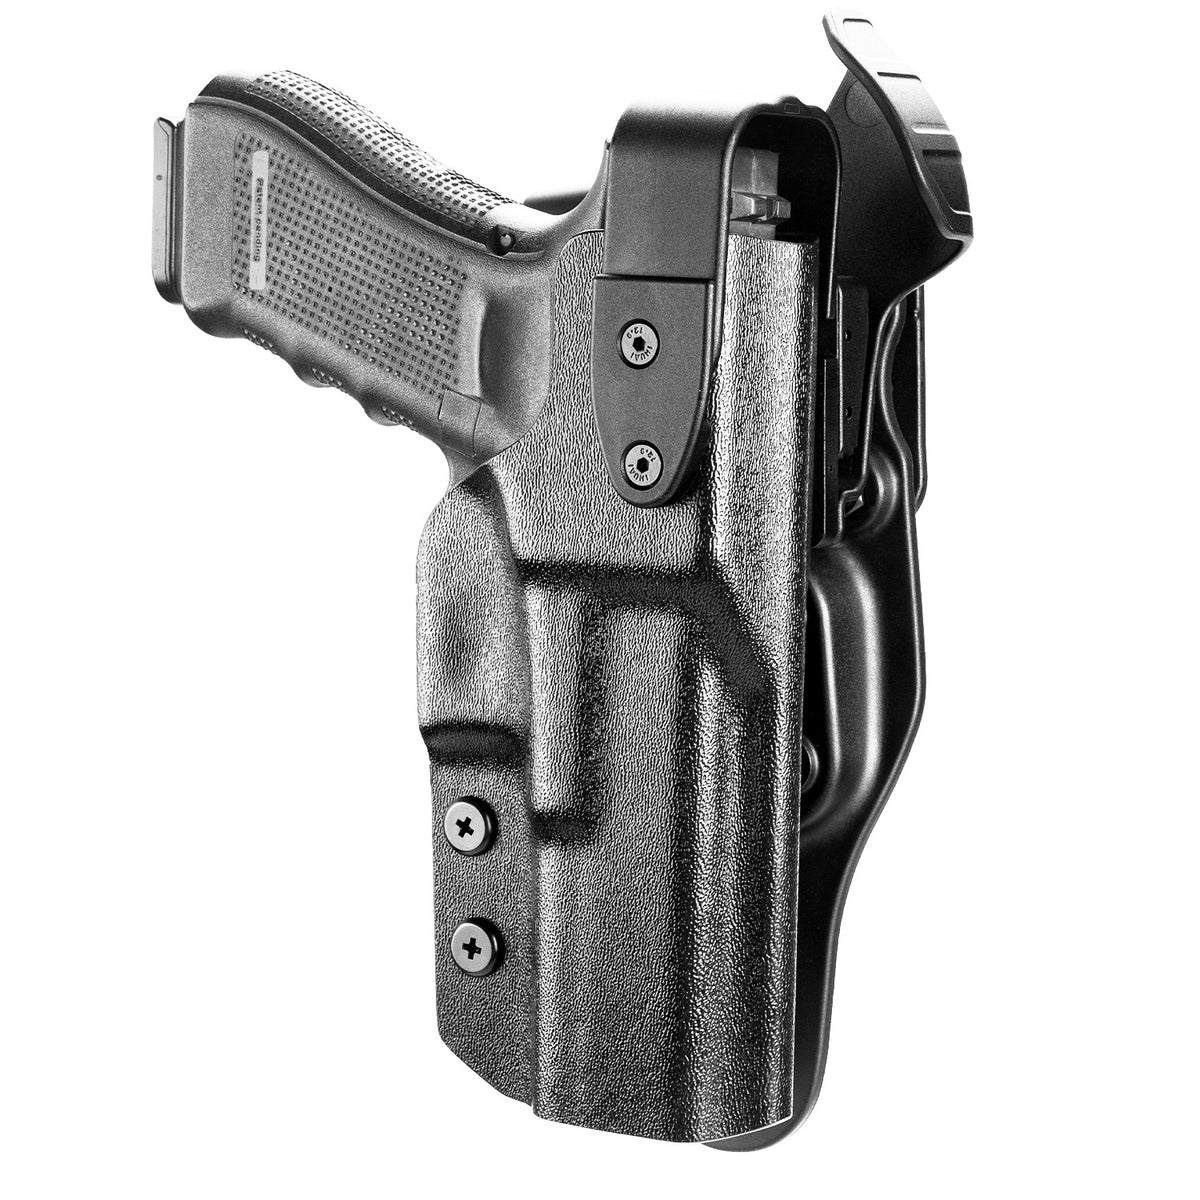 Glock 17 Duty Holster Level II Retention w/Hook Guard & Rotating Hood: Glock 17 Gen 3 4 5 & G22 G31 Gen 3 4, 2.25 Inch Outside Waistband Holster G17, Adj. Retention & Ride Height, Right|WARRIORLAND